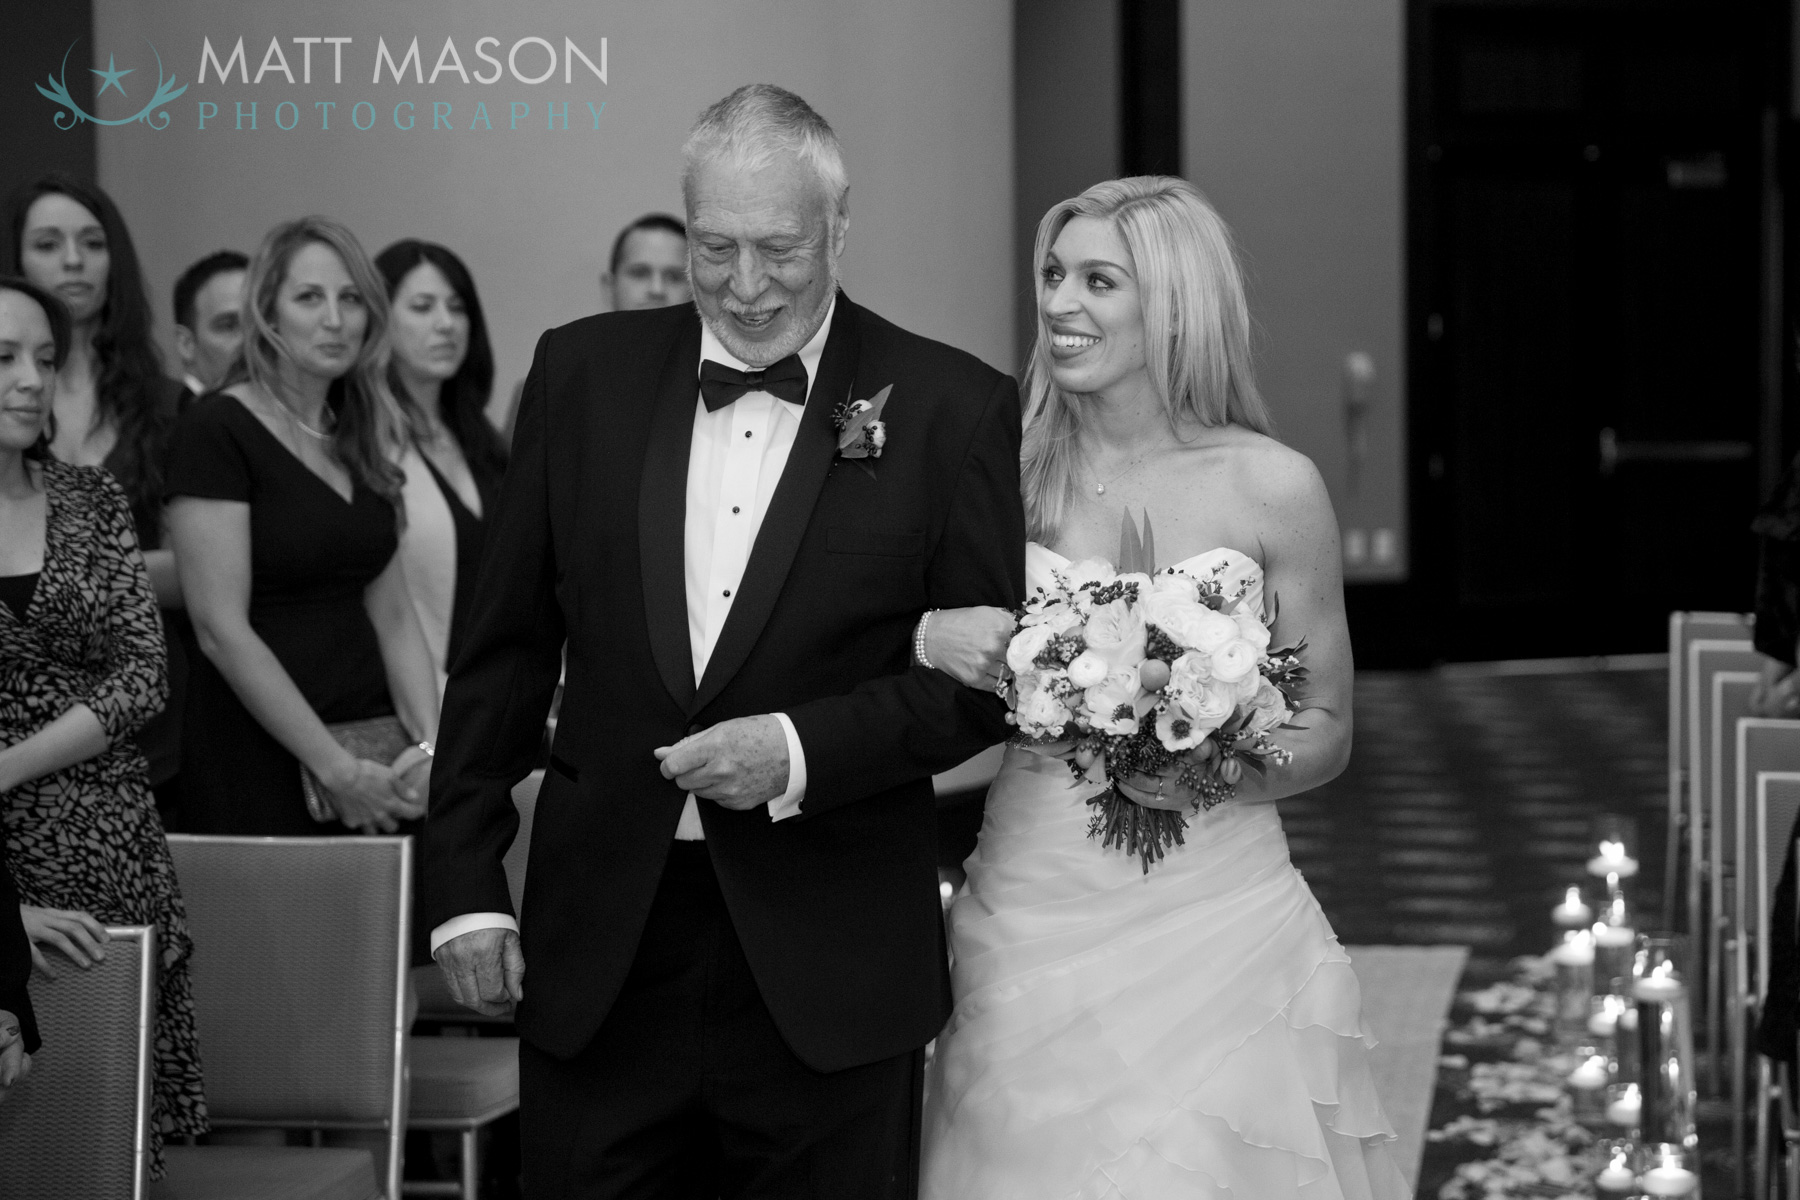 Matt-Mason-Photography-Father-Daughter-MattMasonPhotography-3.jpg